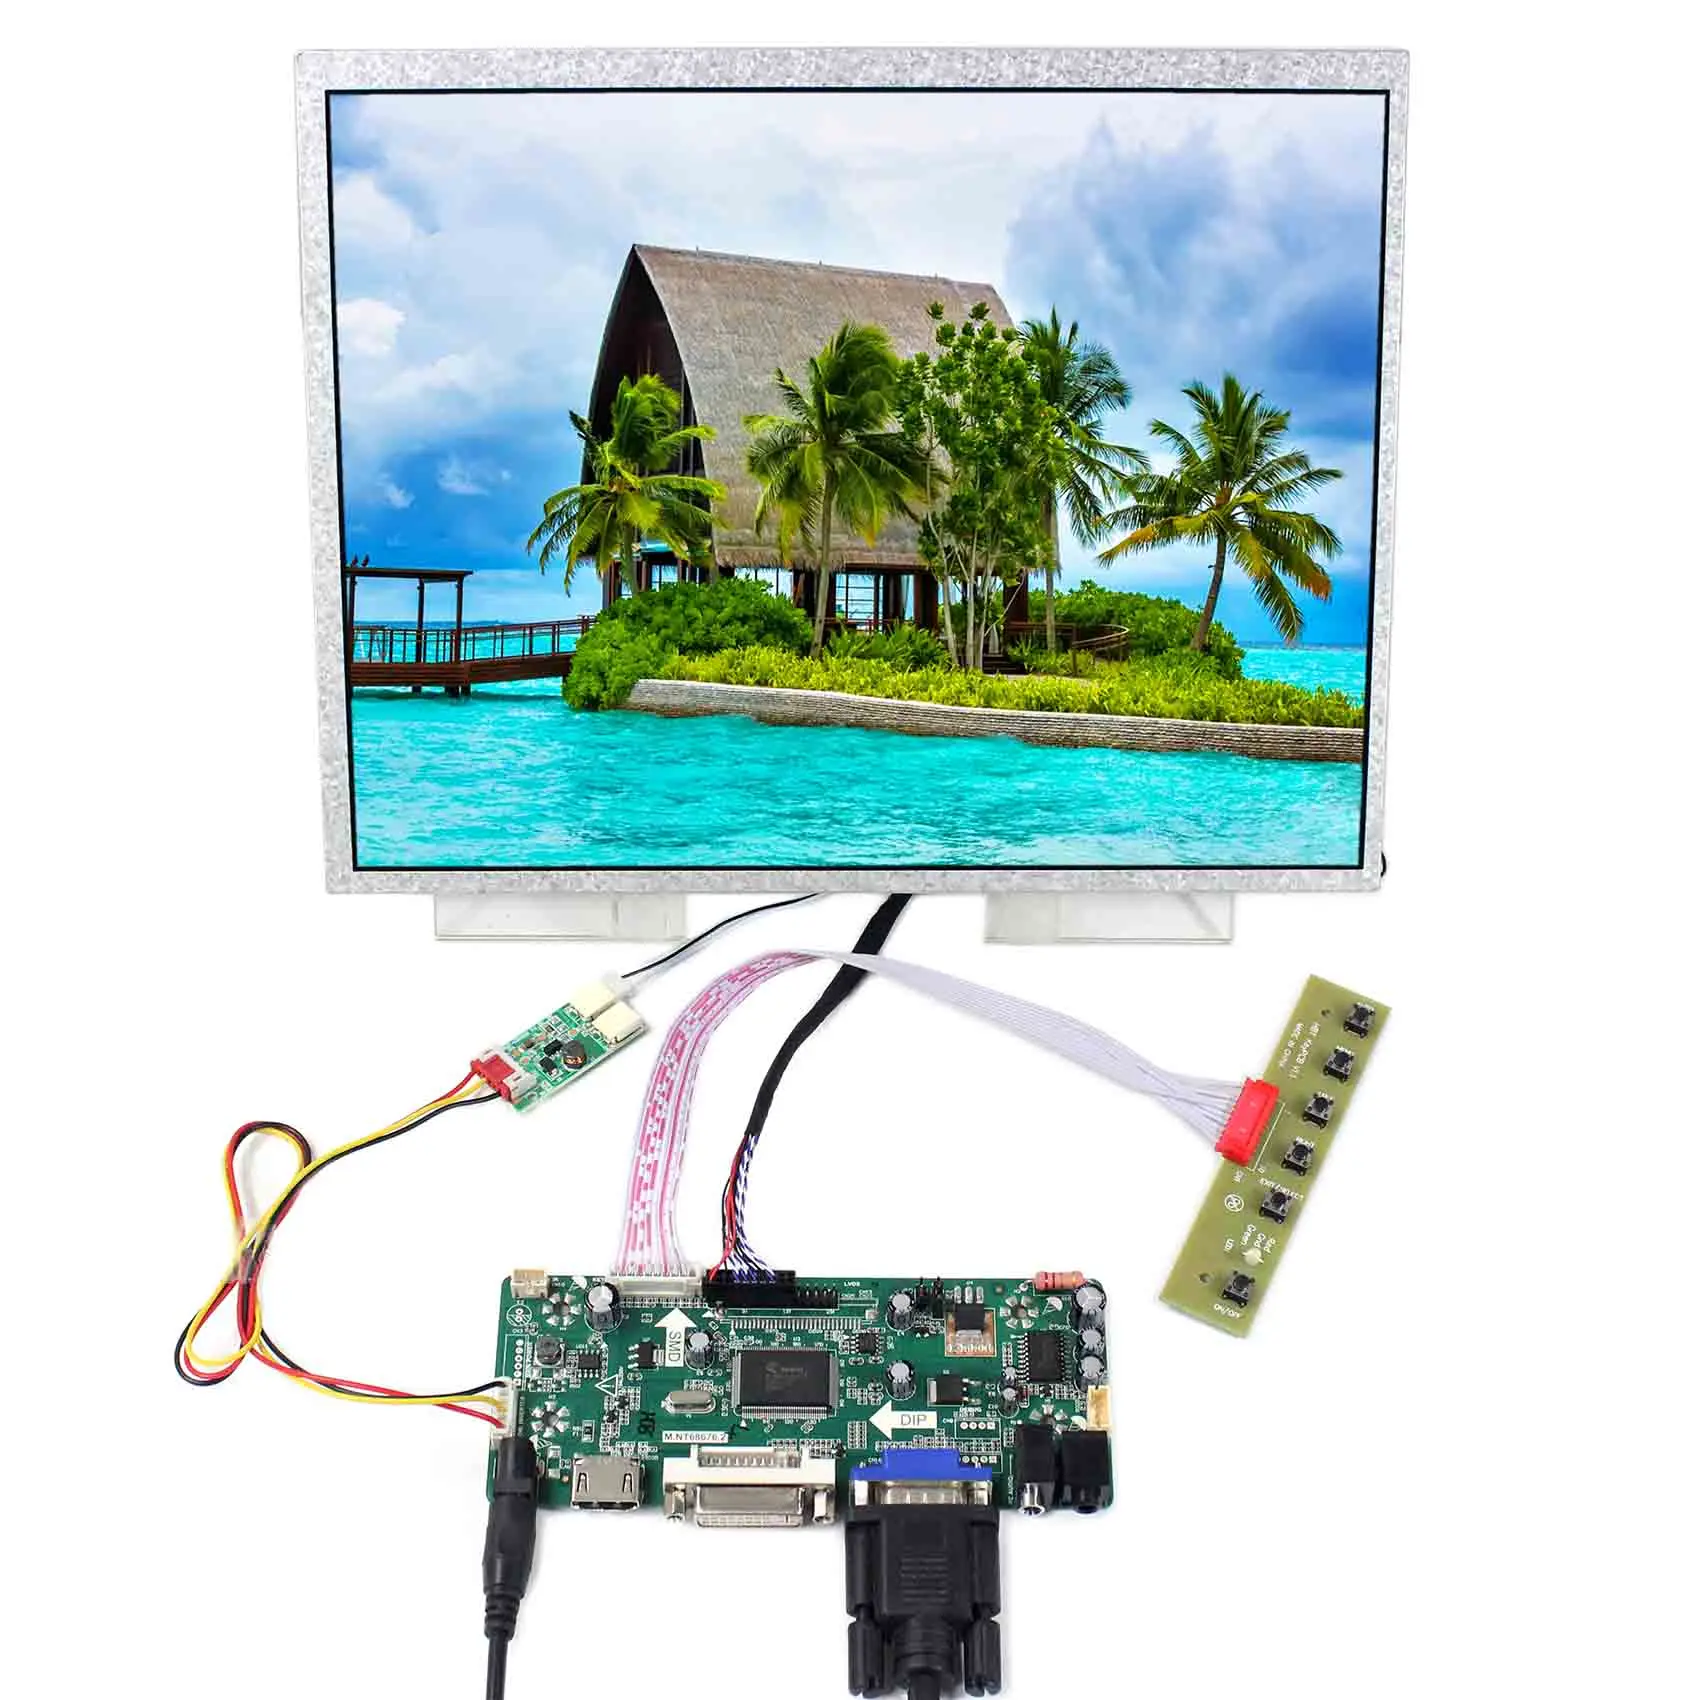 HD MI VGA DVI LCD Controller Board M. NT68676 delo z 12.1 palca VS121T-001A LCD Zaslon 1024 x 768